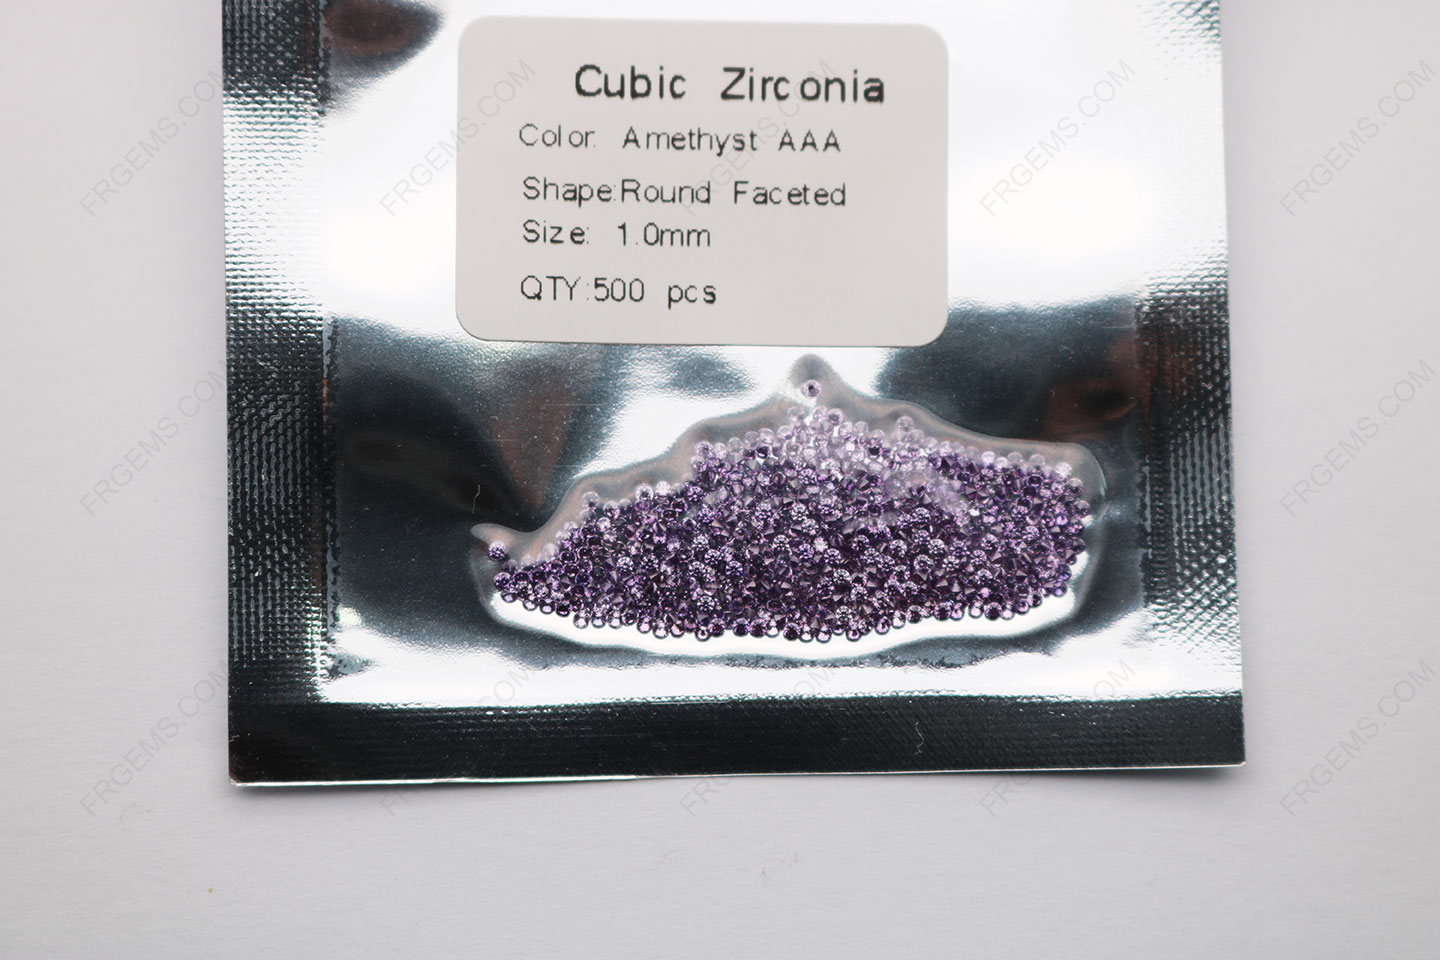 Cubic Zirconia Amethyst Round Shape diamond faceted cut 1mm stones CZ10 IMG_3801